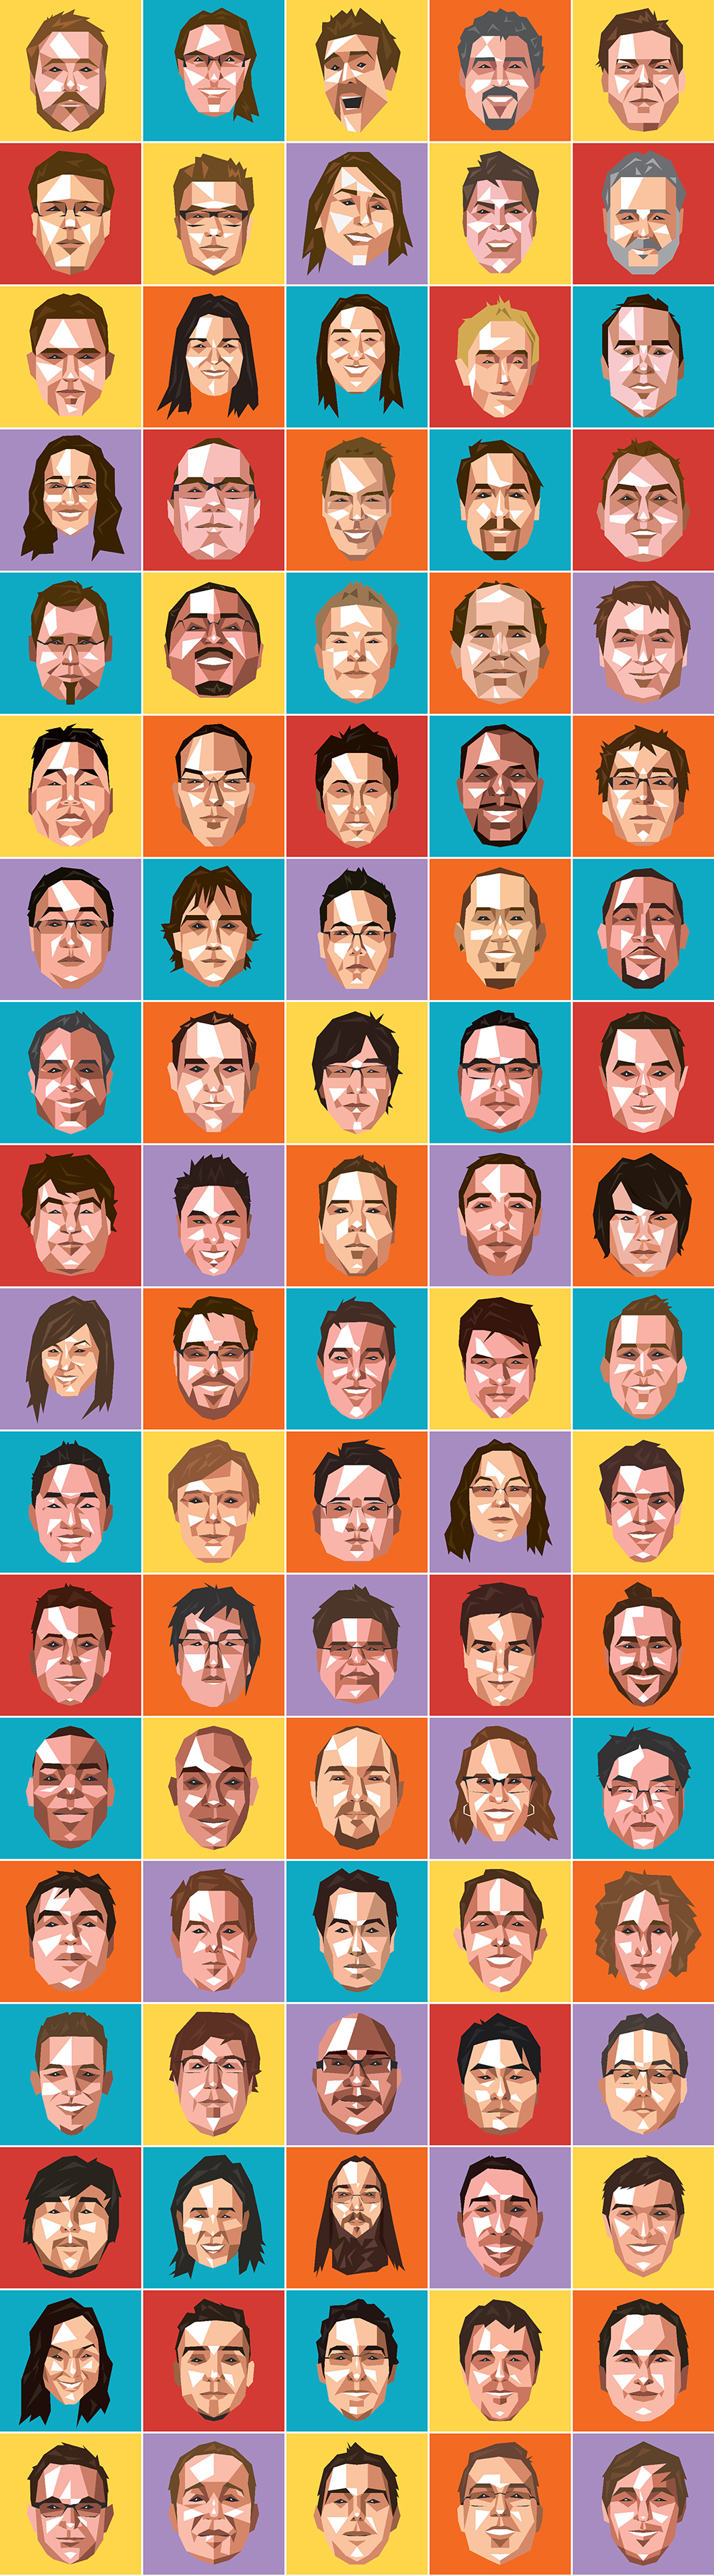 Sony vector portrait head wall videogame avatar